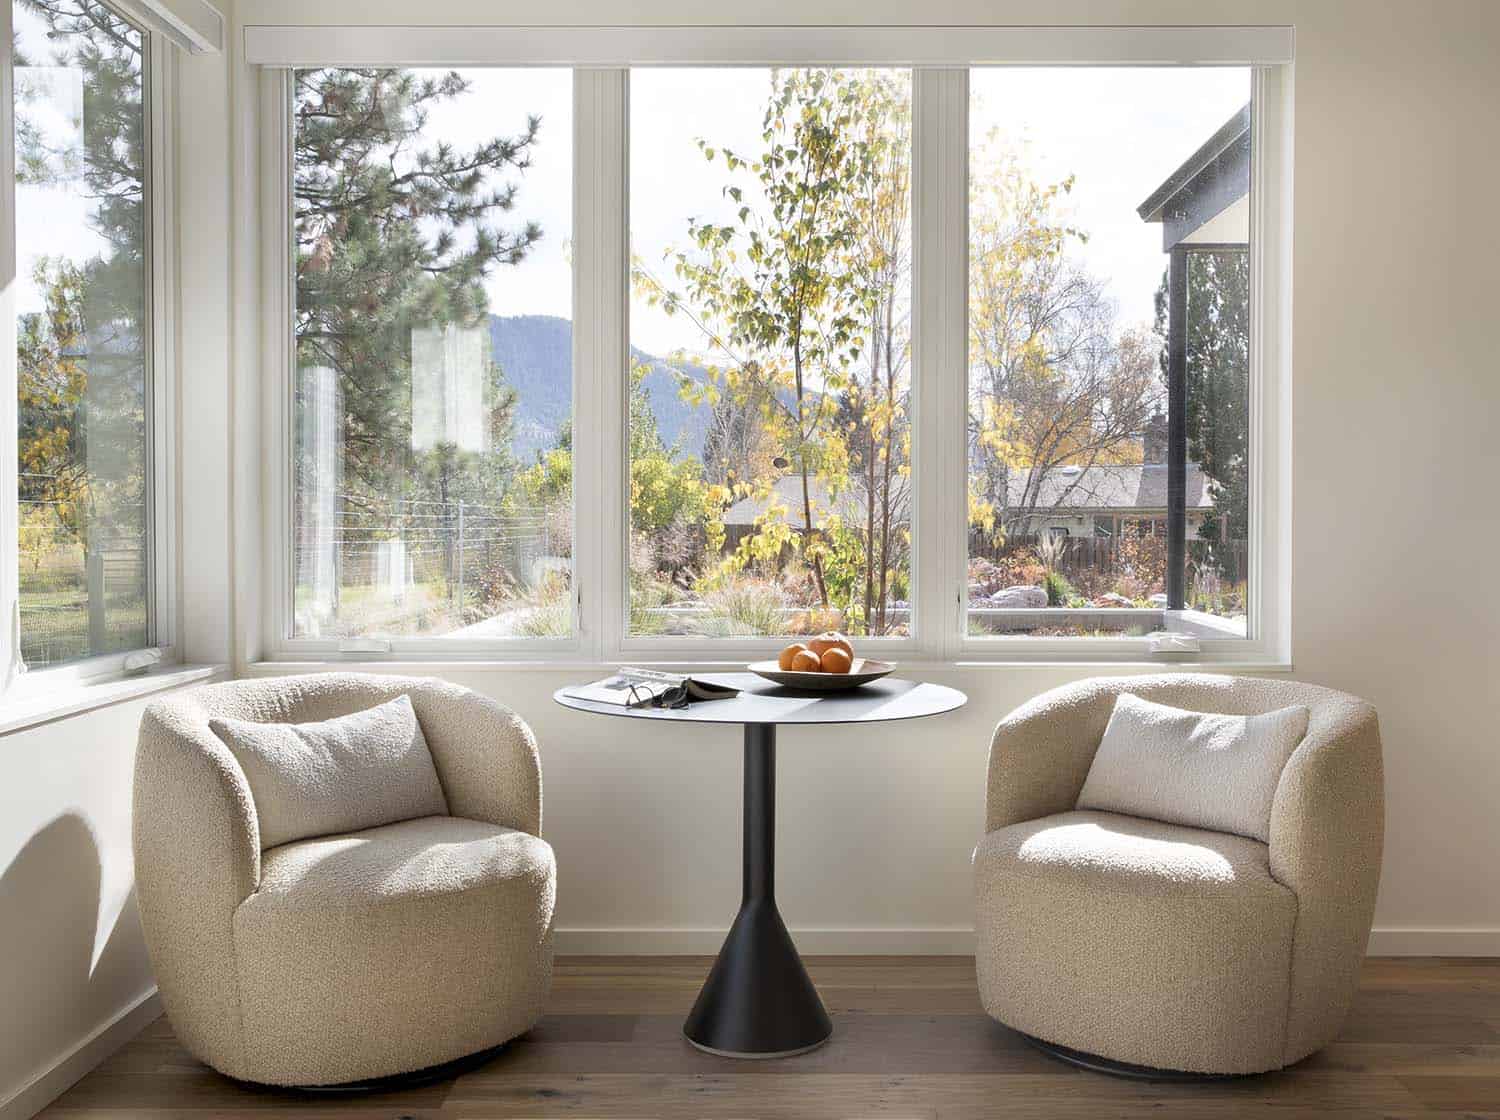 minimalist sitting room with a large window